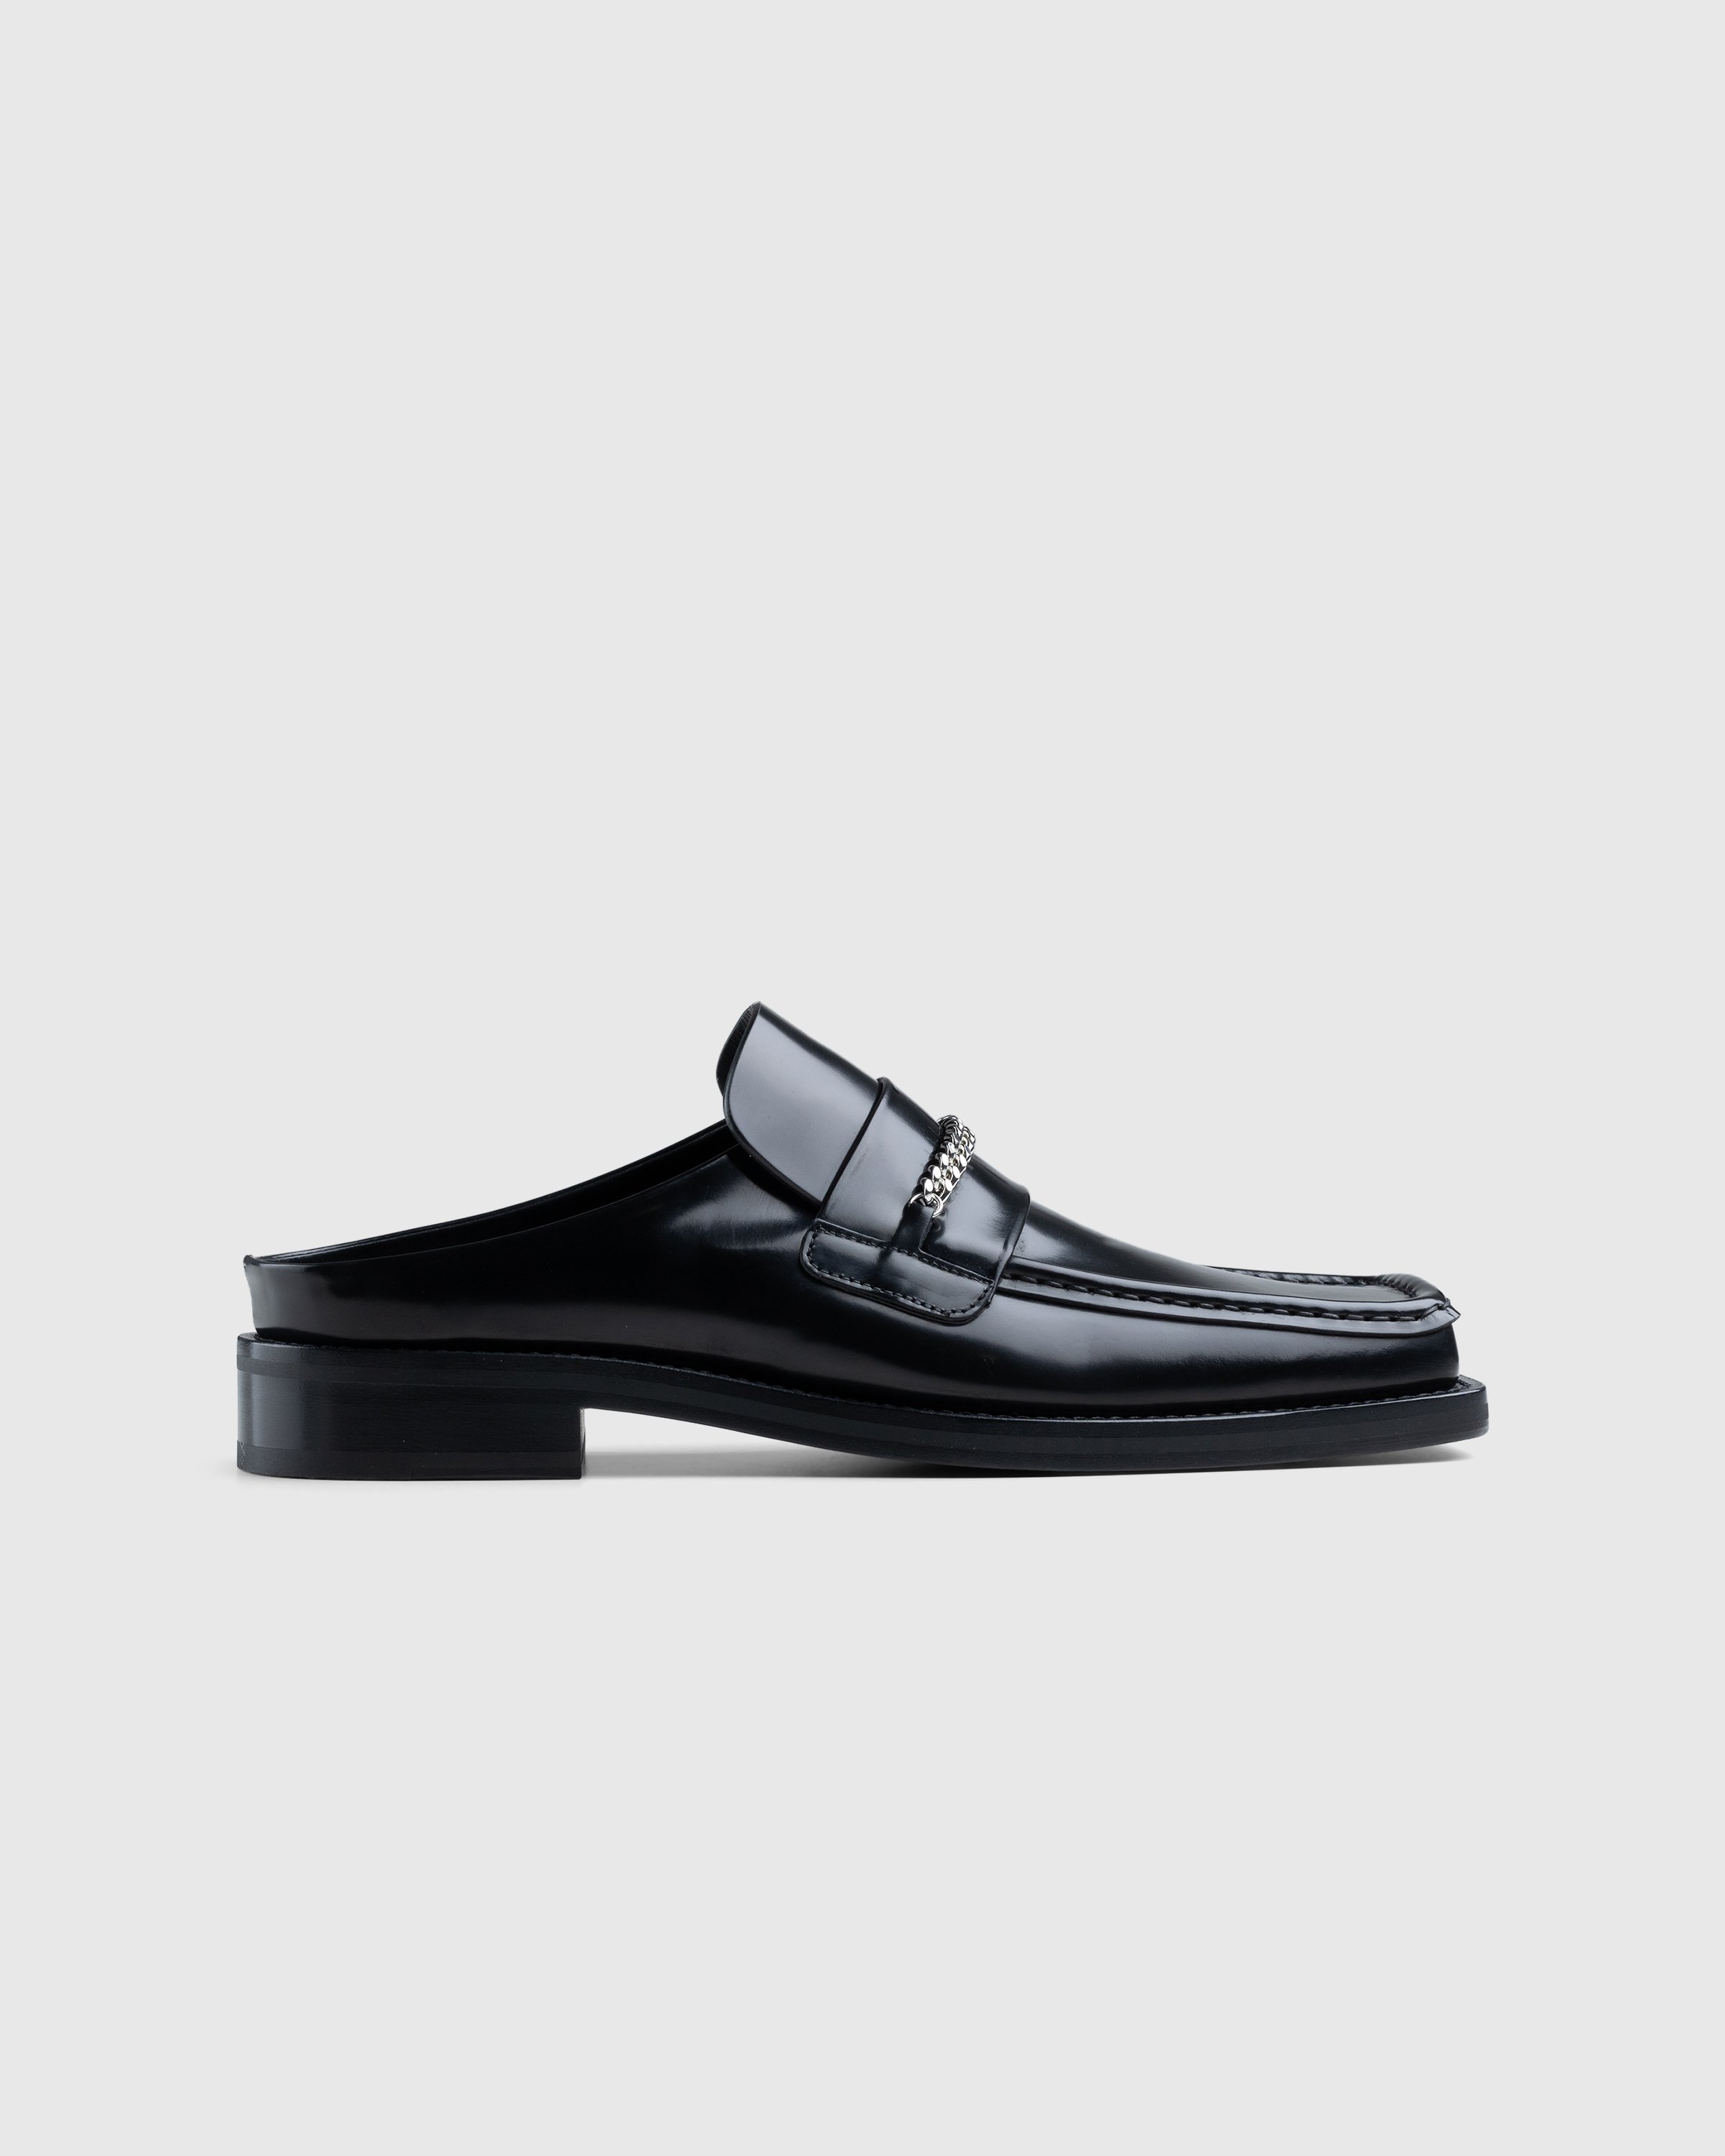 Martine Rose - Square Toe Mule Black High Shine - Footwear - Black - Image 1